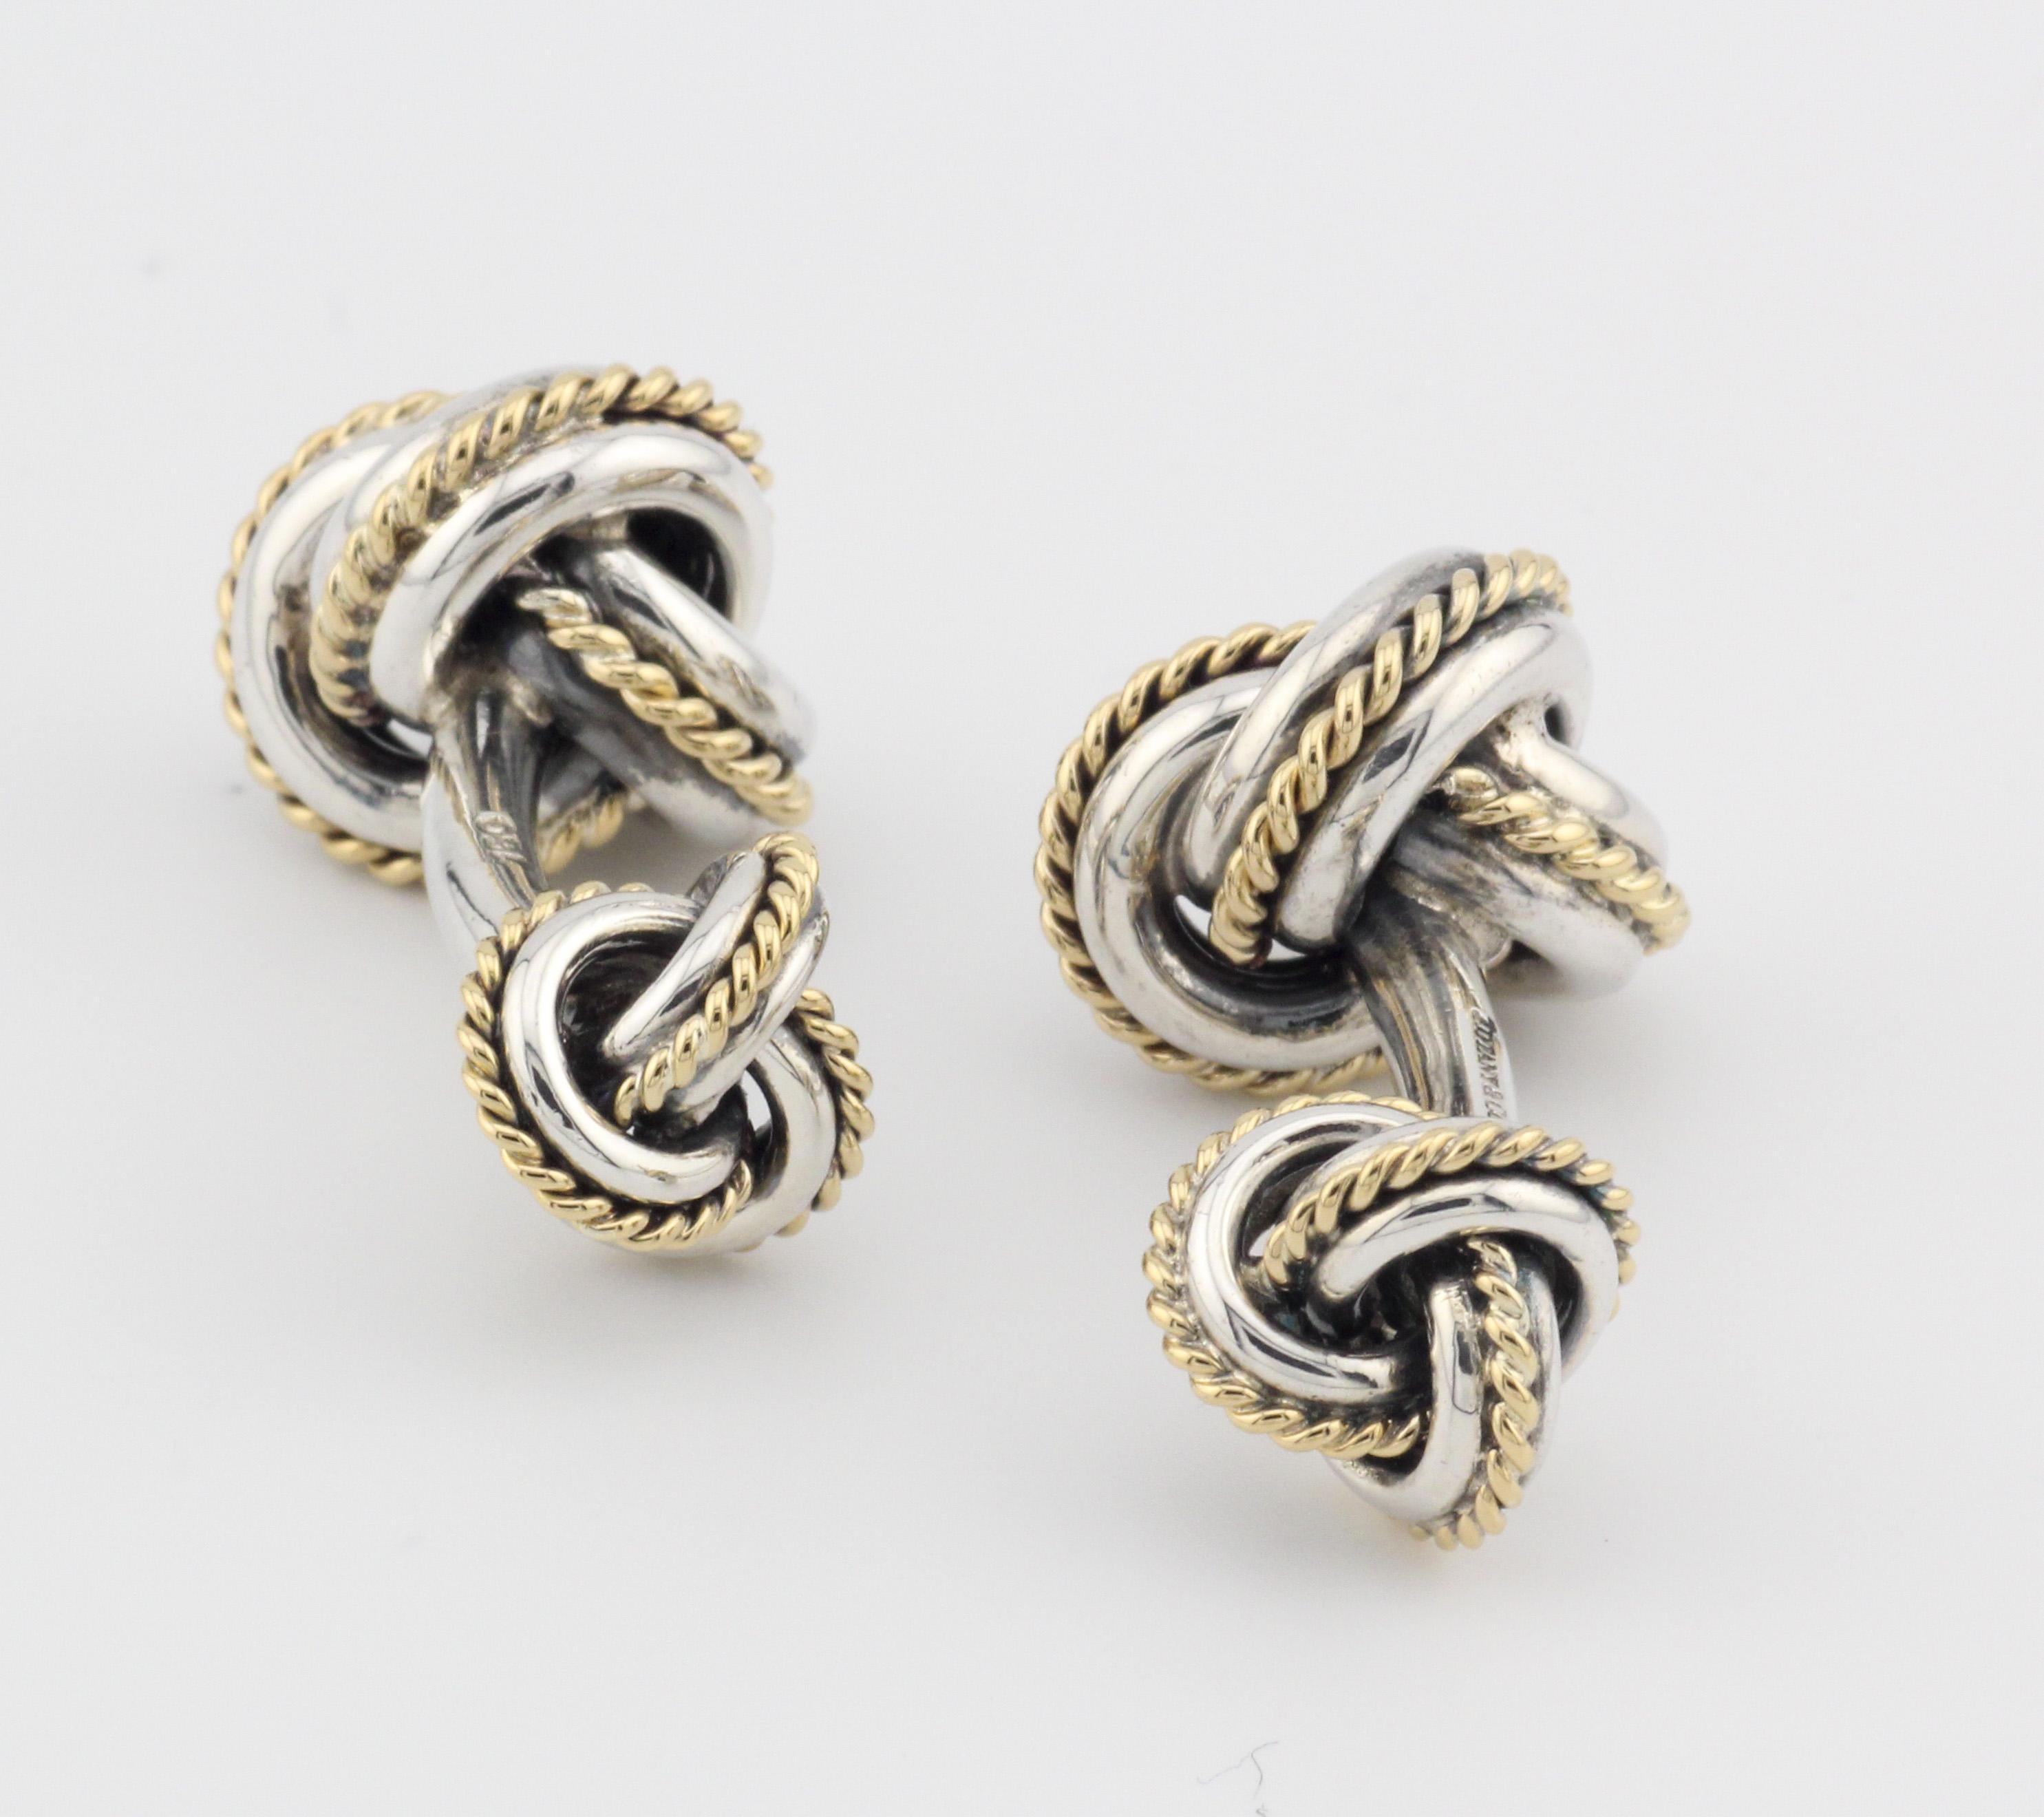 Tiffany & Co 18k Gold Sterling Silver Rope Knot Cufflinks Pour hommes en vente